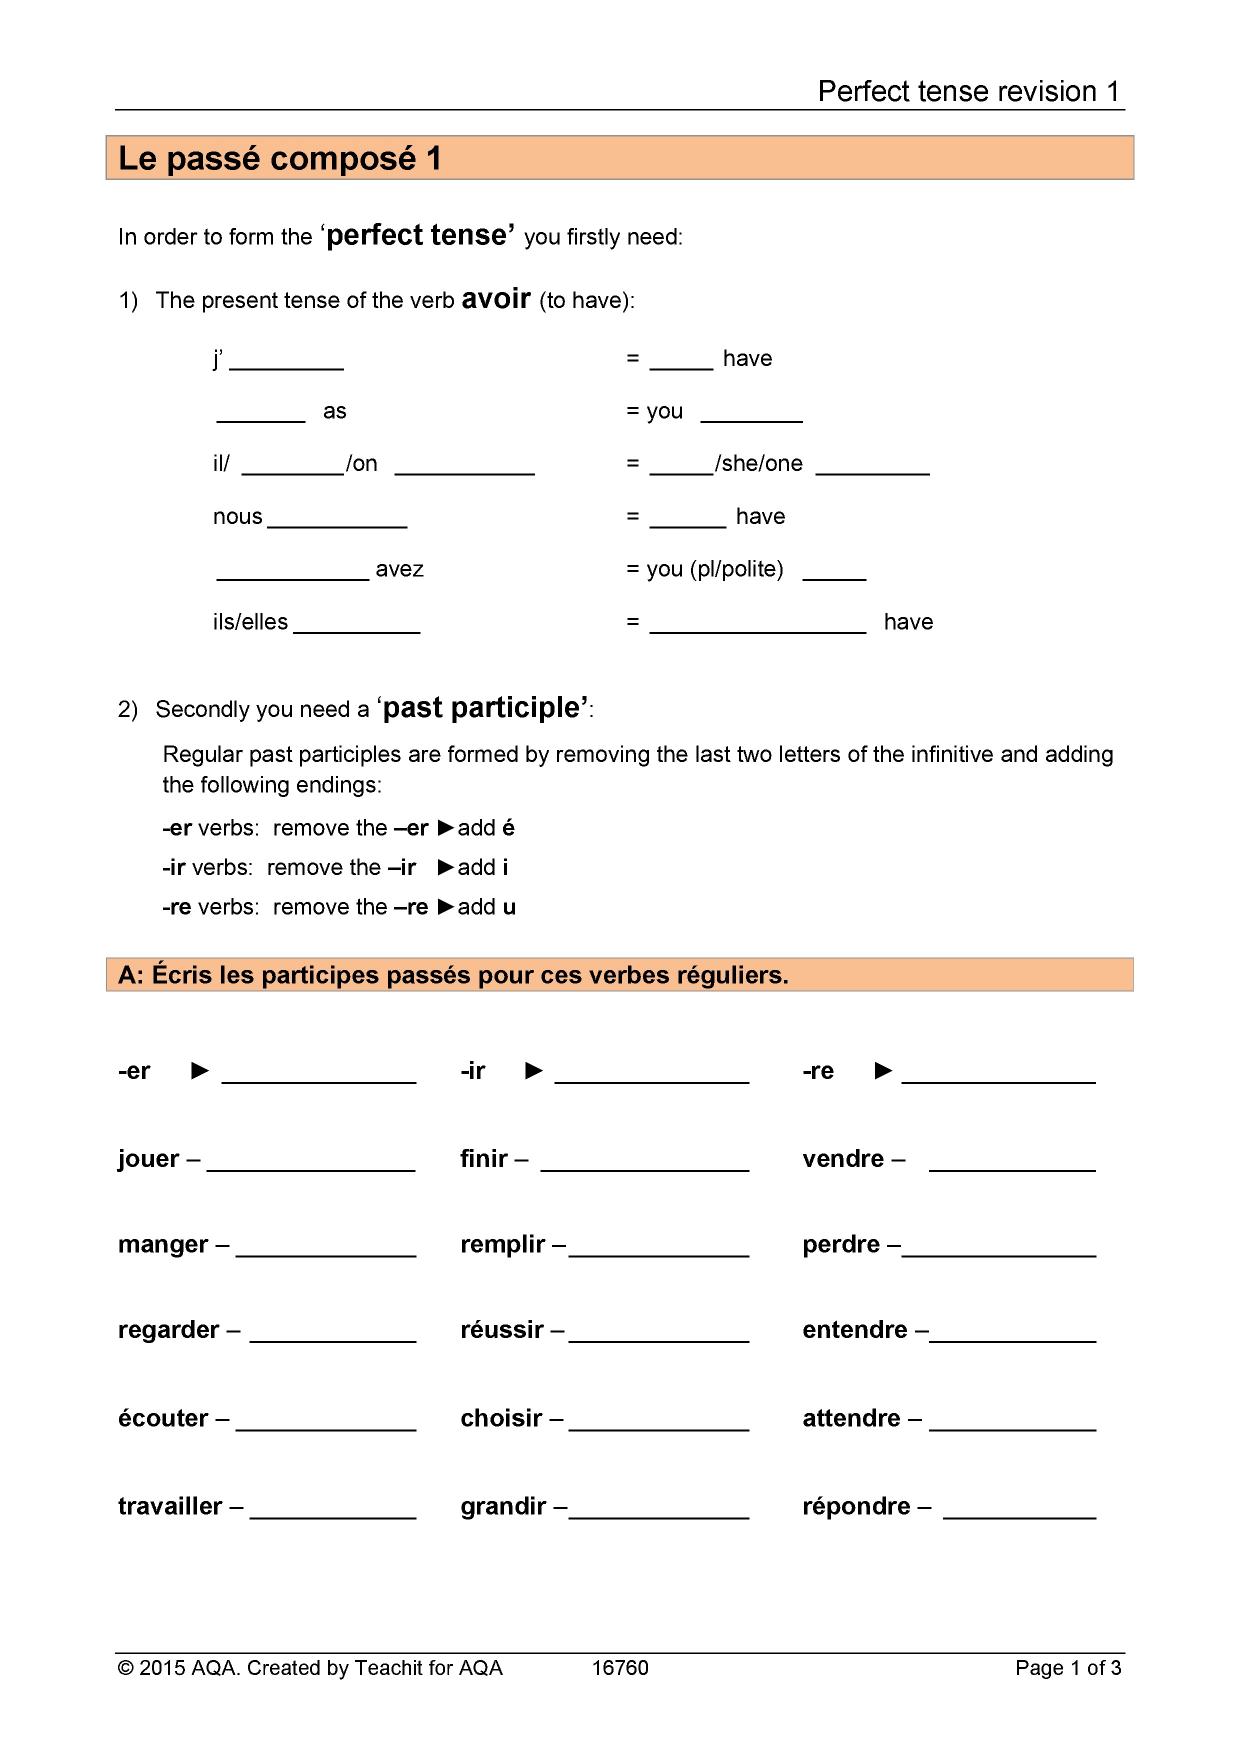 perfect-tense-worksheets-grammar-revision-ks3-4-french-teaching-resource-teachit